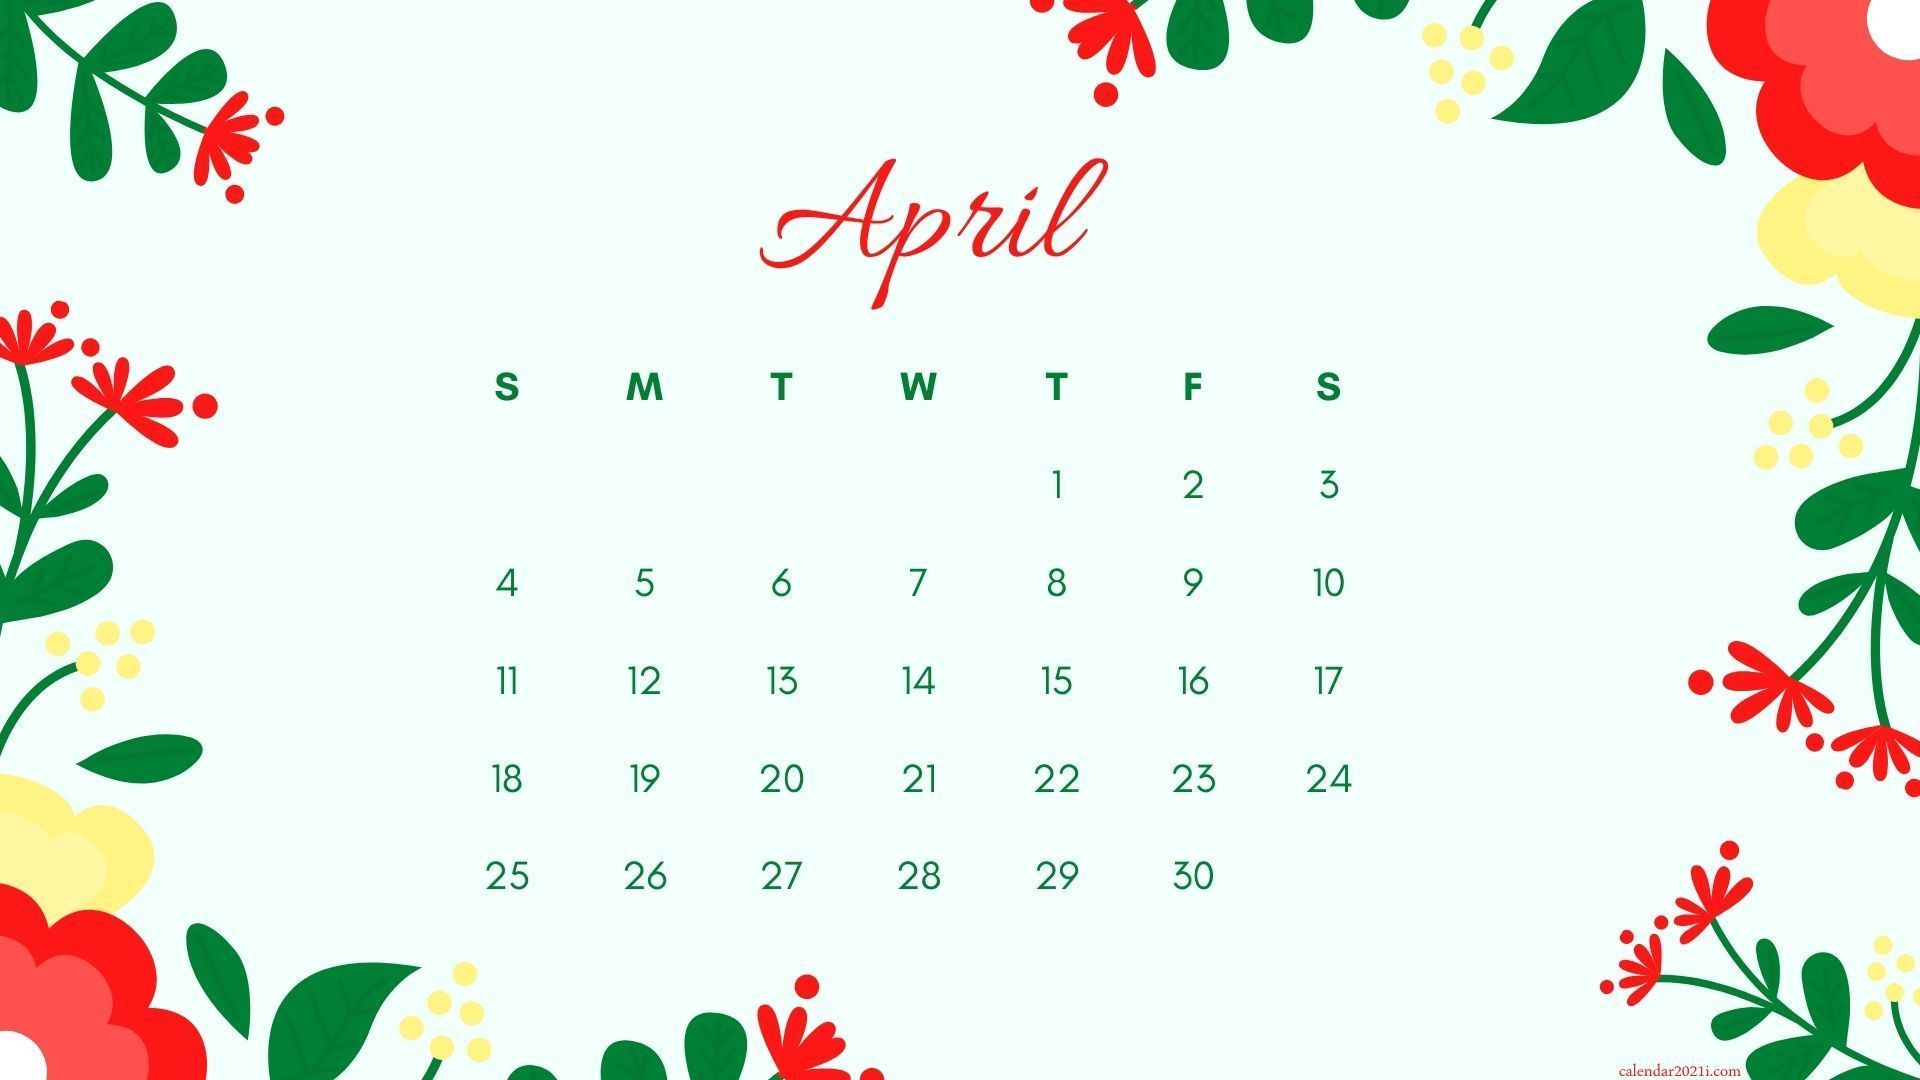 Downloadcalendar April 2021 / April 2021 Calendar Free  Bts 2022 Calendar Printable Pdf